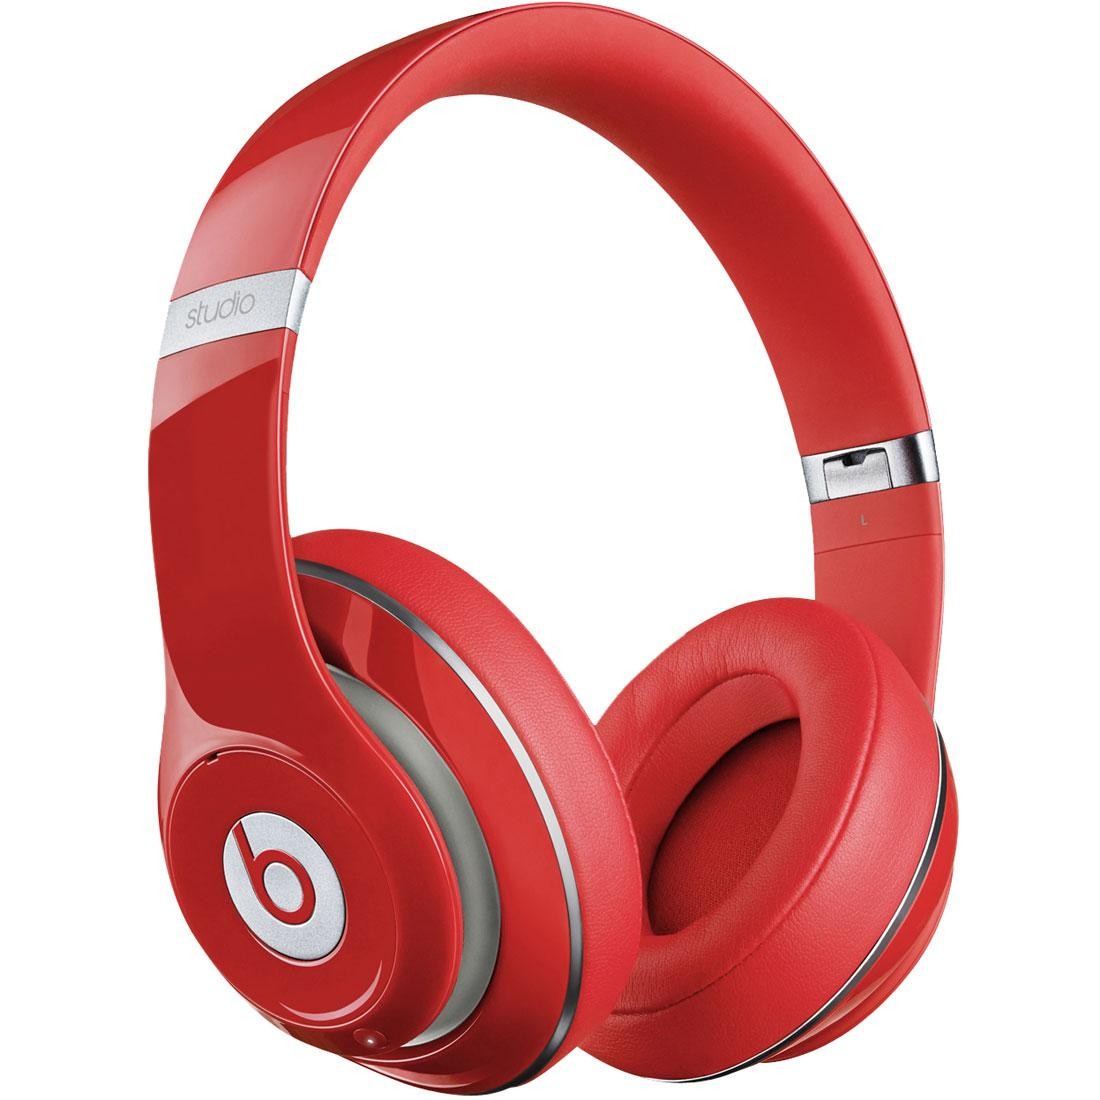 Beats By Dre Studio Wireless Over-Ear Headphones (red)